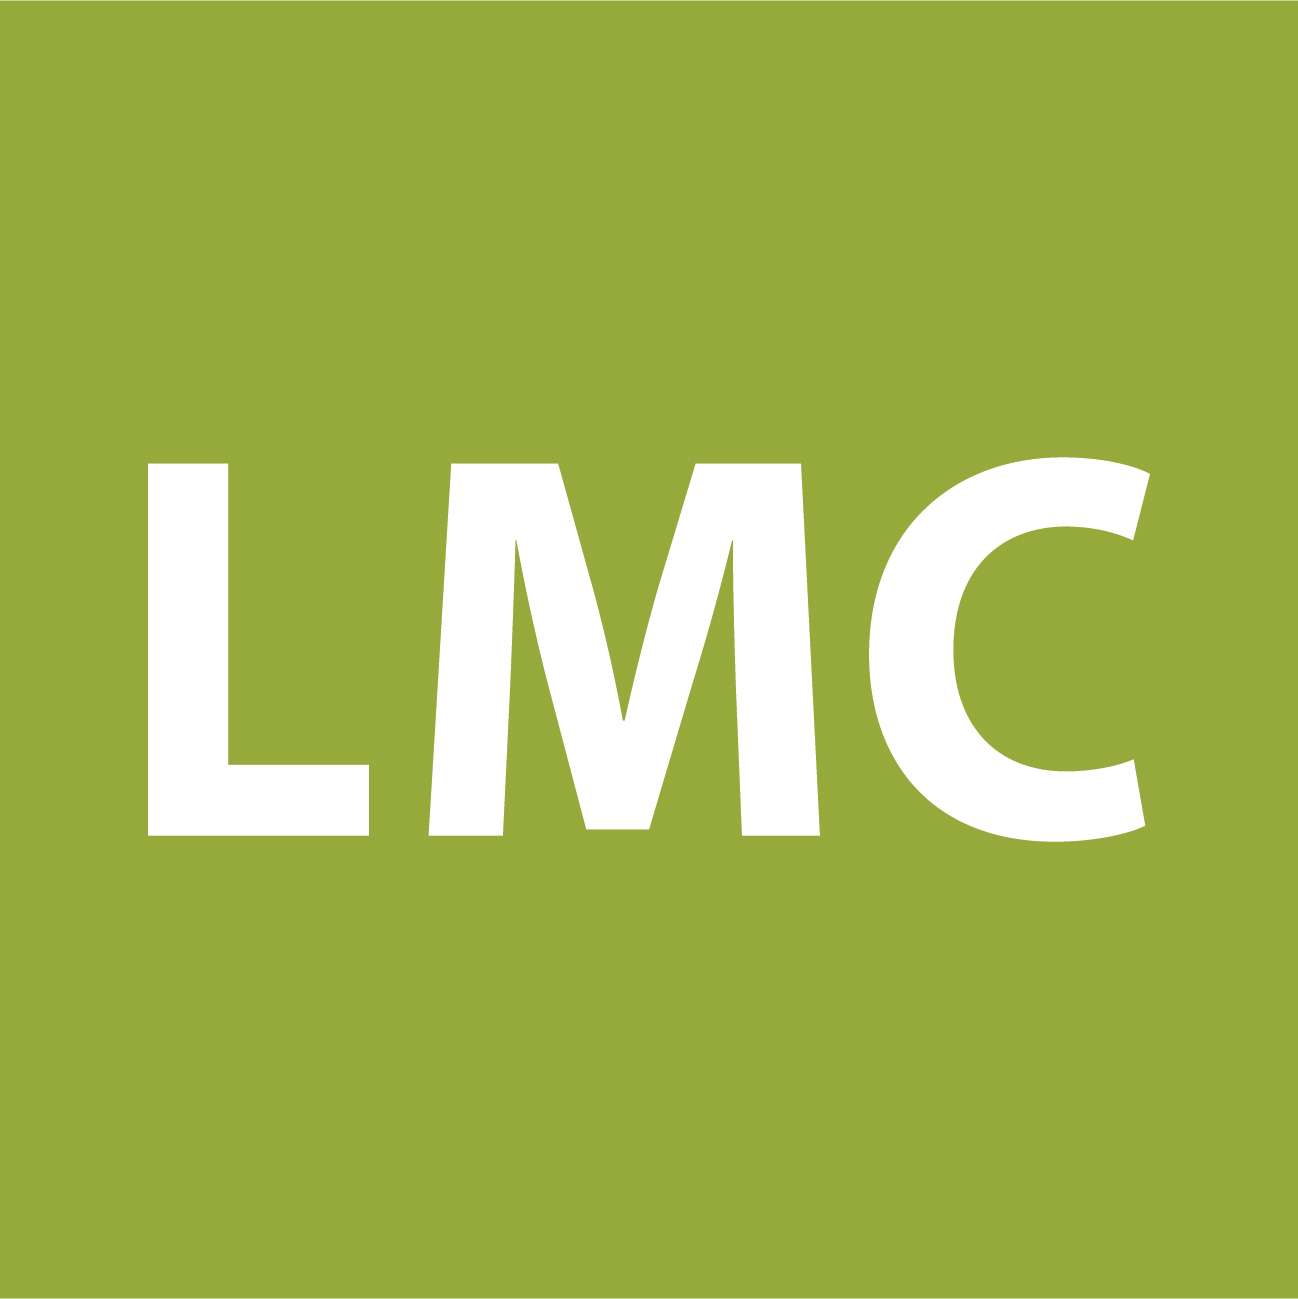 LMC_icon.jpg